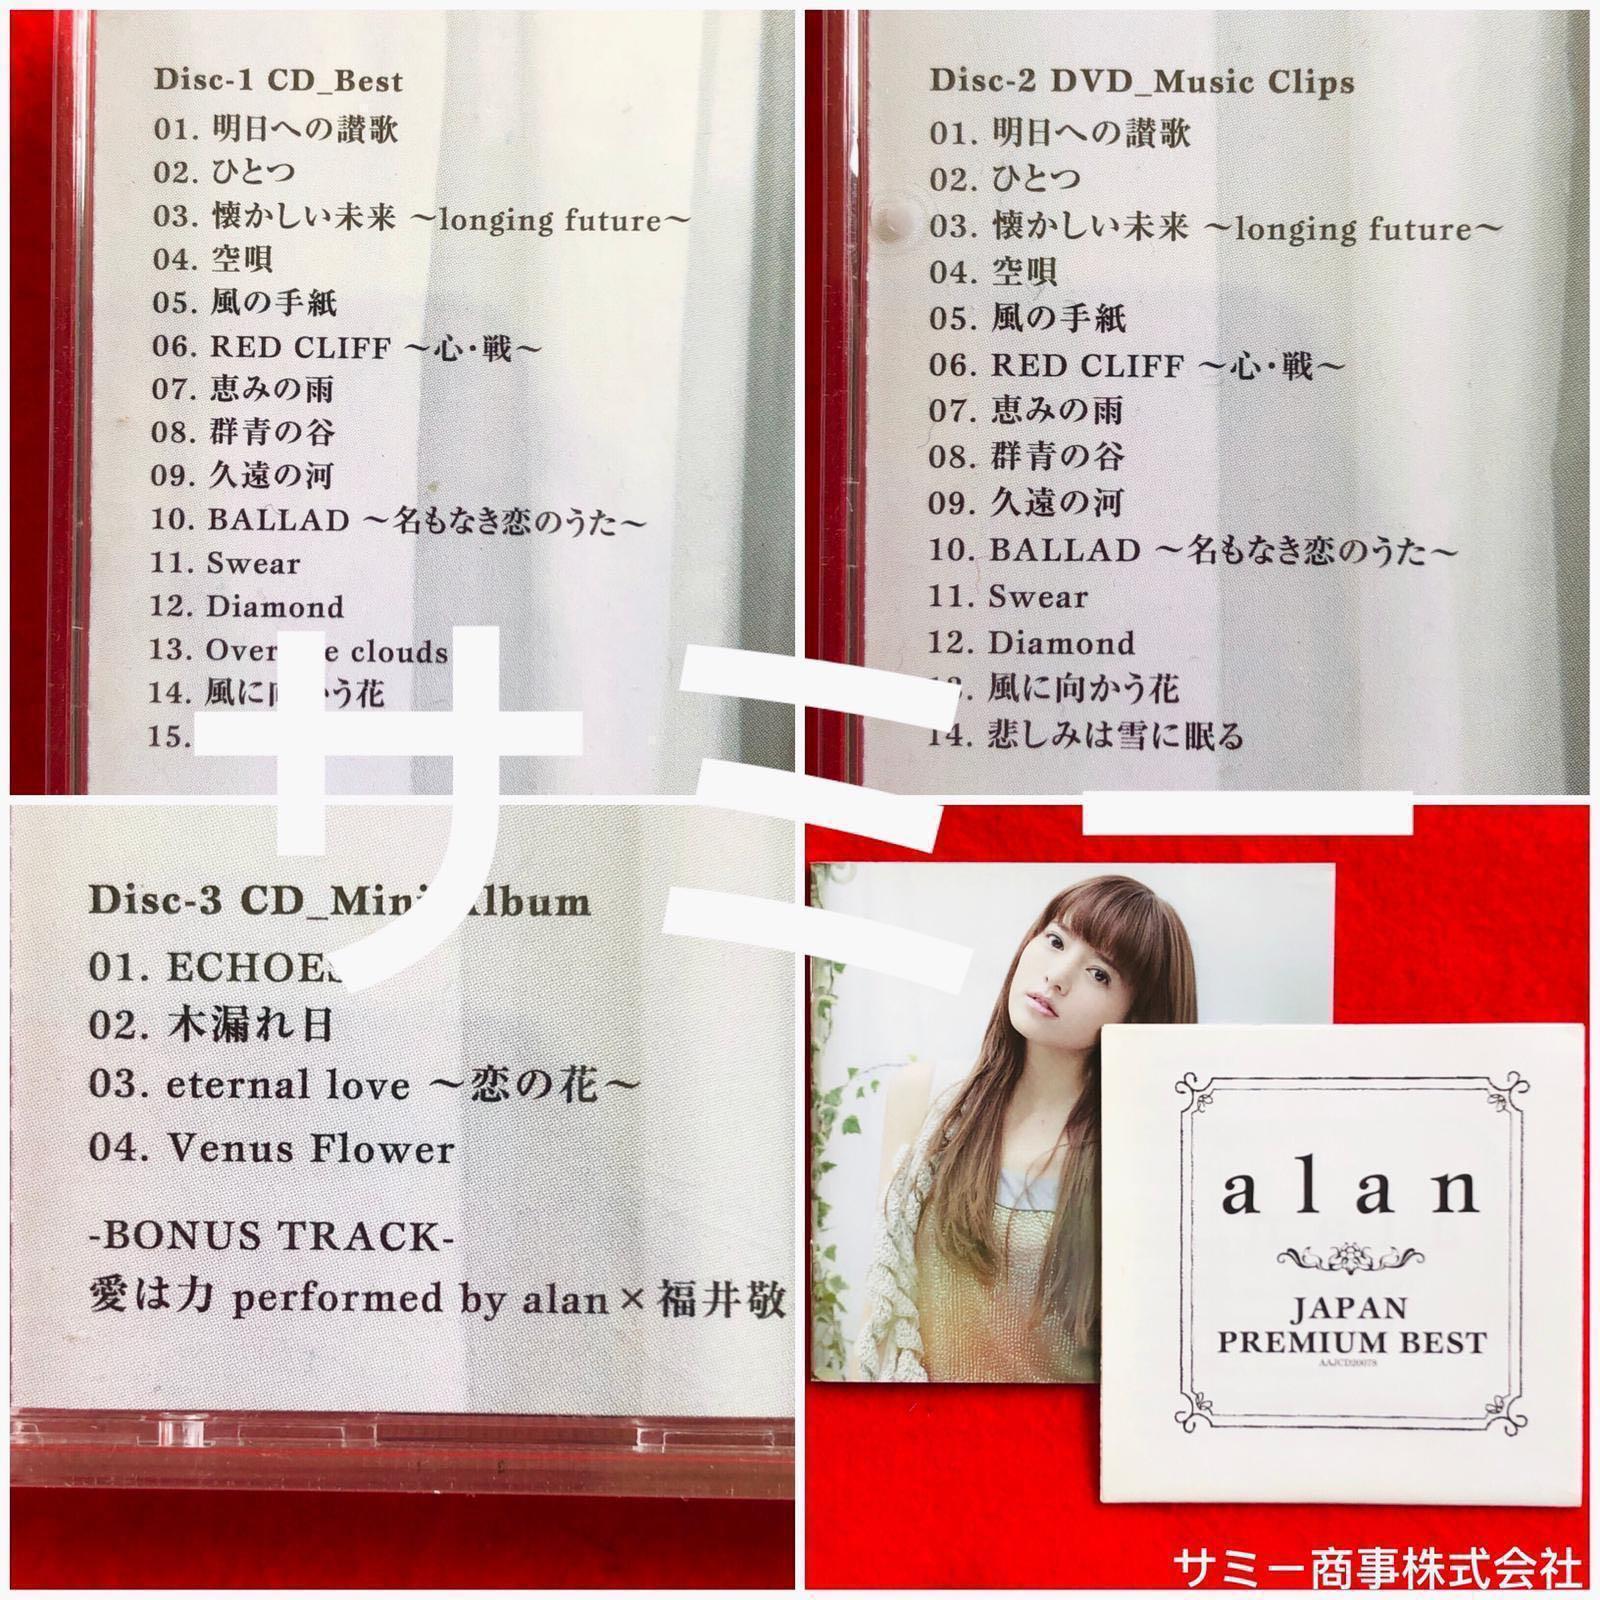 alan (アラン)《 JAPAN PREMIUM BEST & MORE 》(🇭🇰香港版)(首張日文